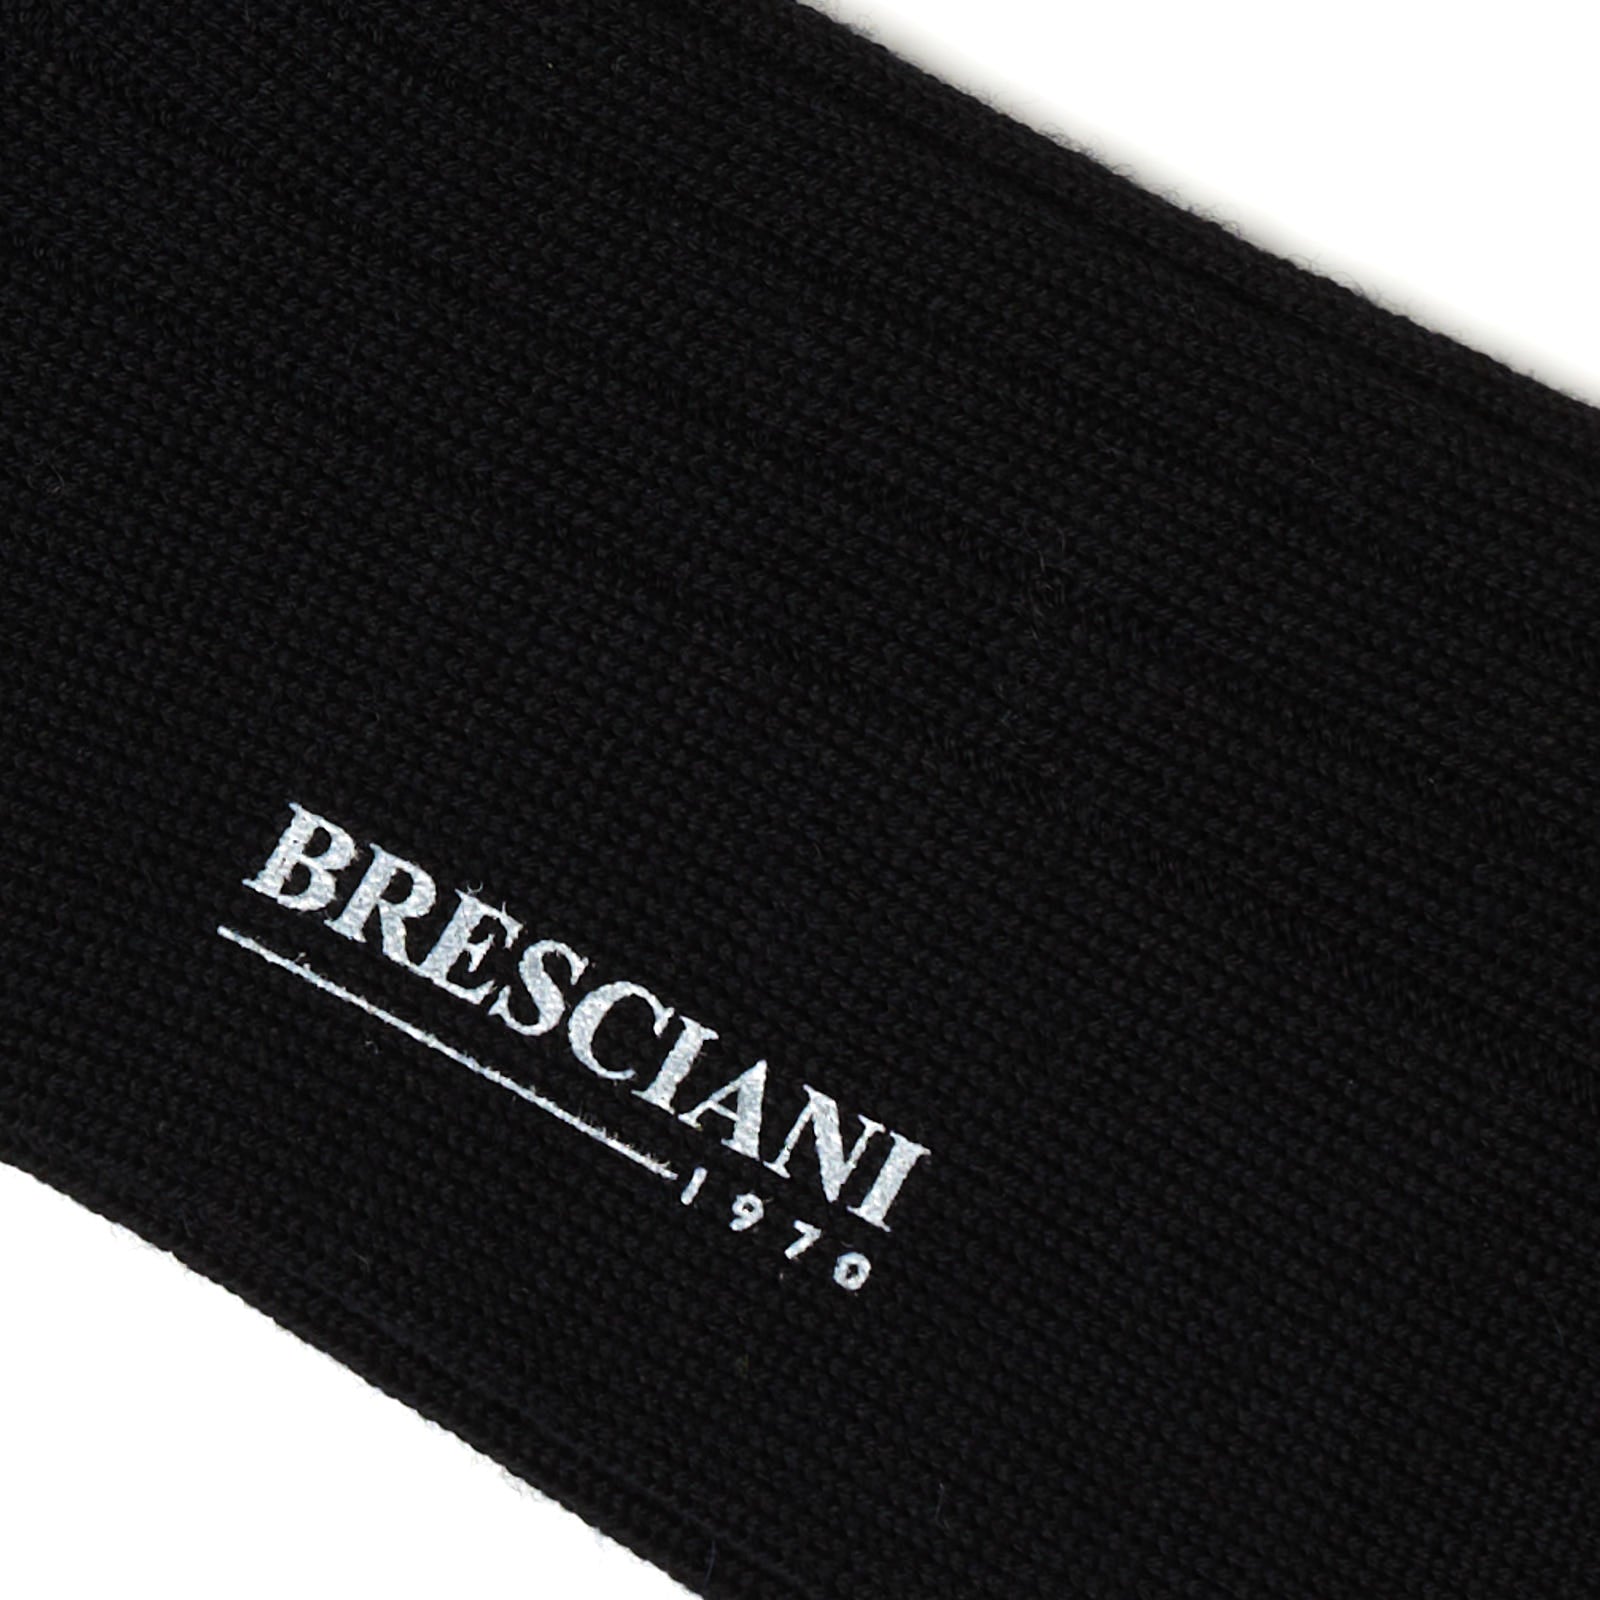 BRESCIANI "Lupo" Wool Blend Mid Calf Length Socks US M-L BRESCIANI